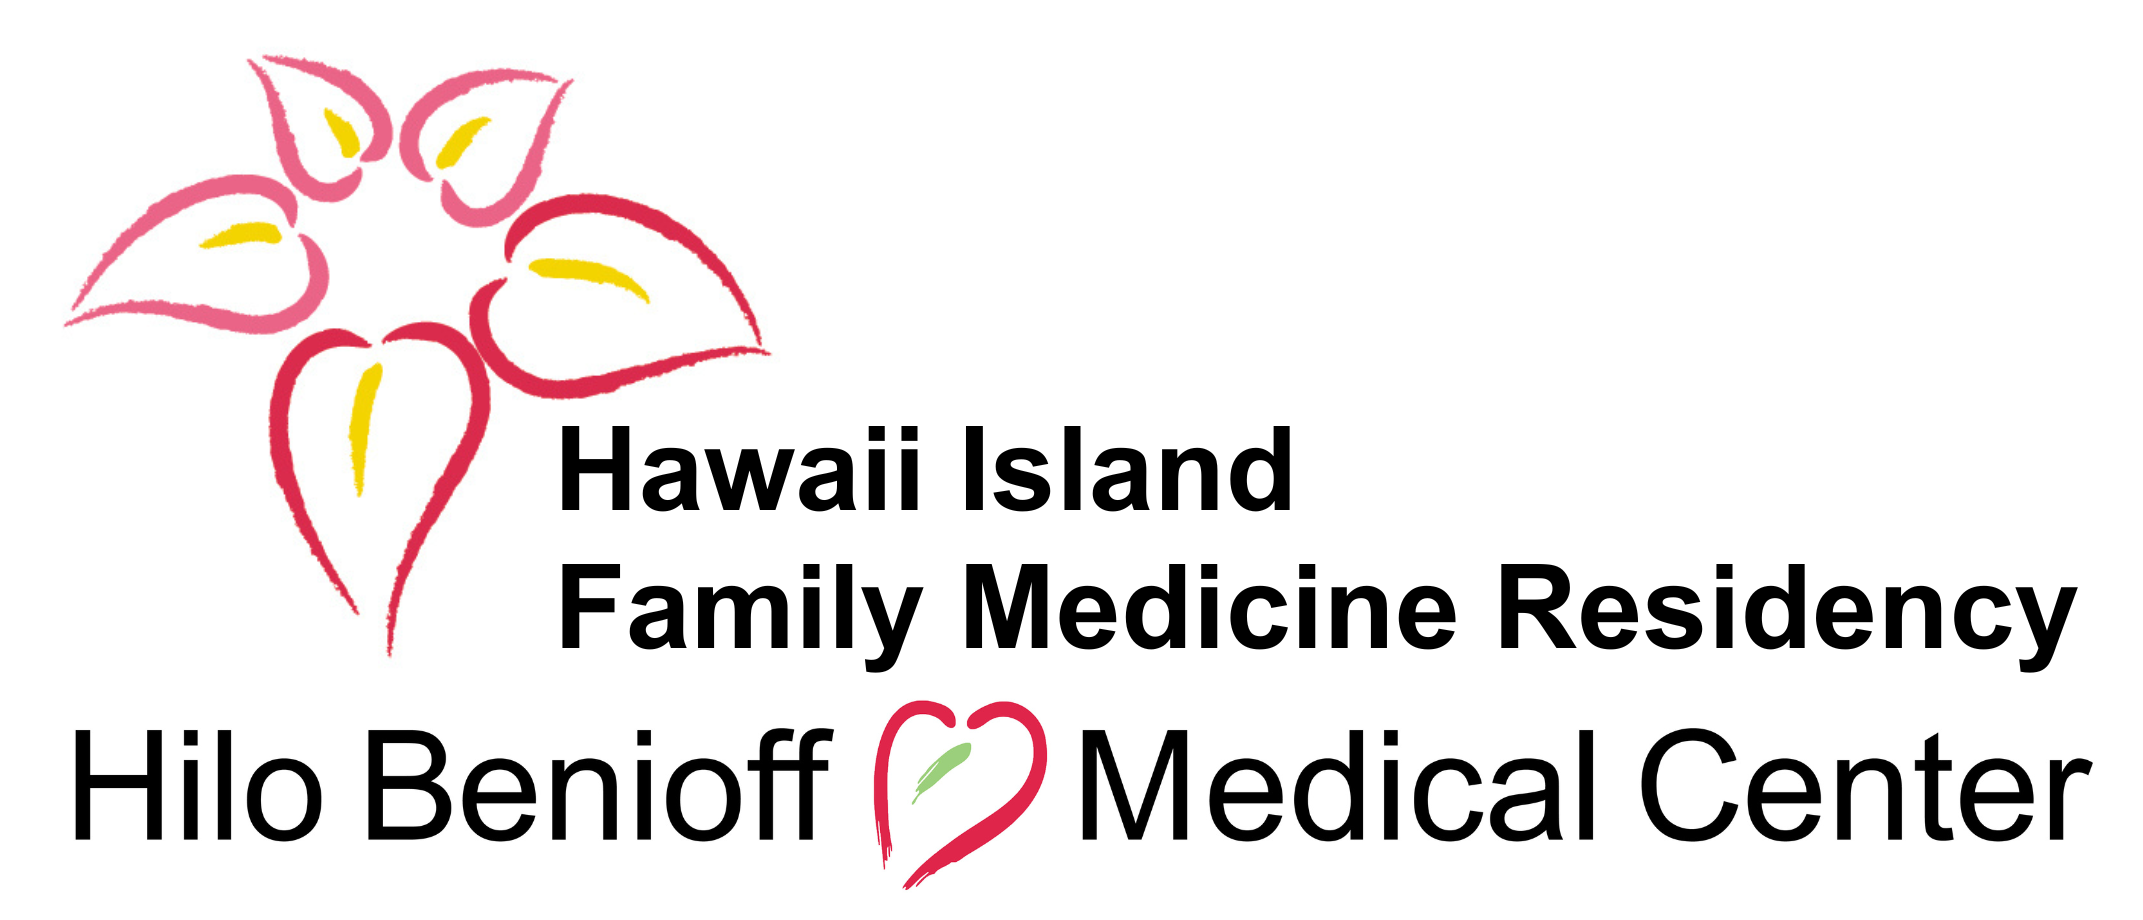 Hawaii Island Family Medicine Residency